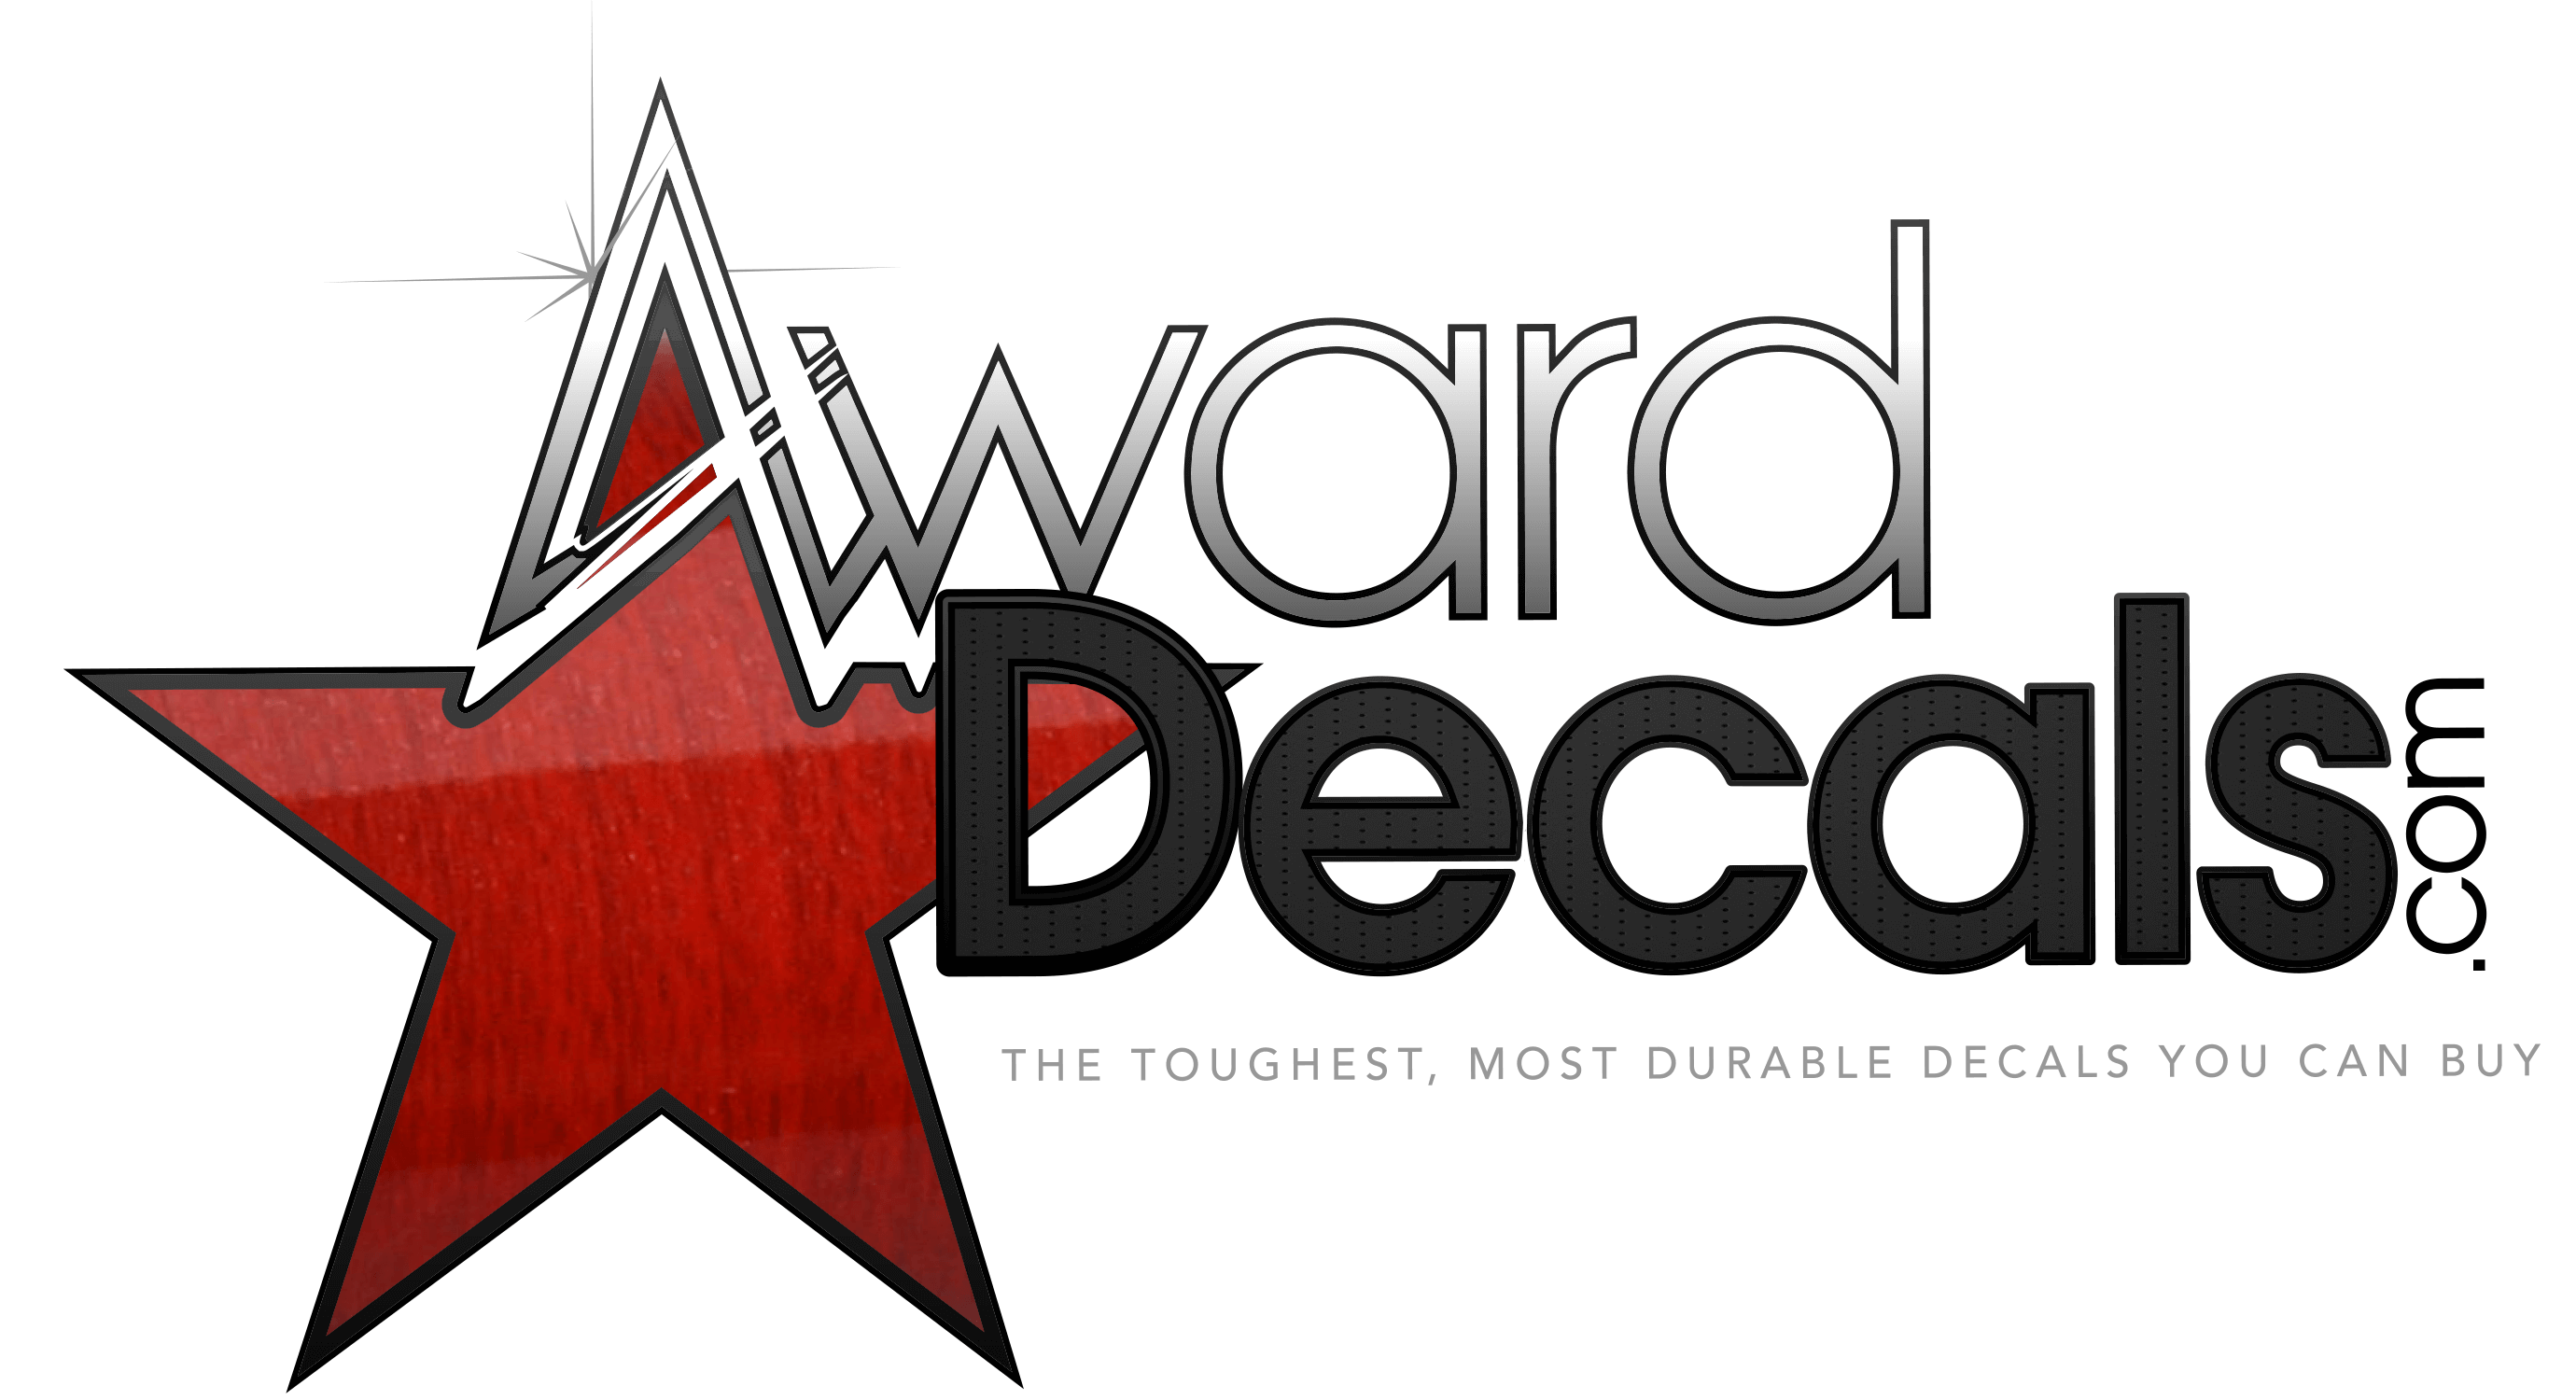 Award Decals